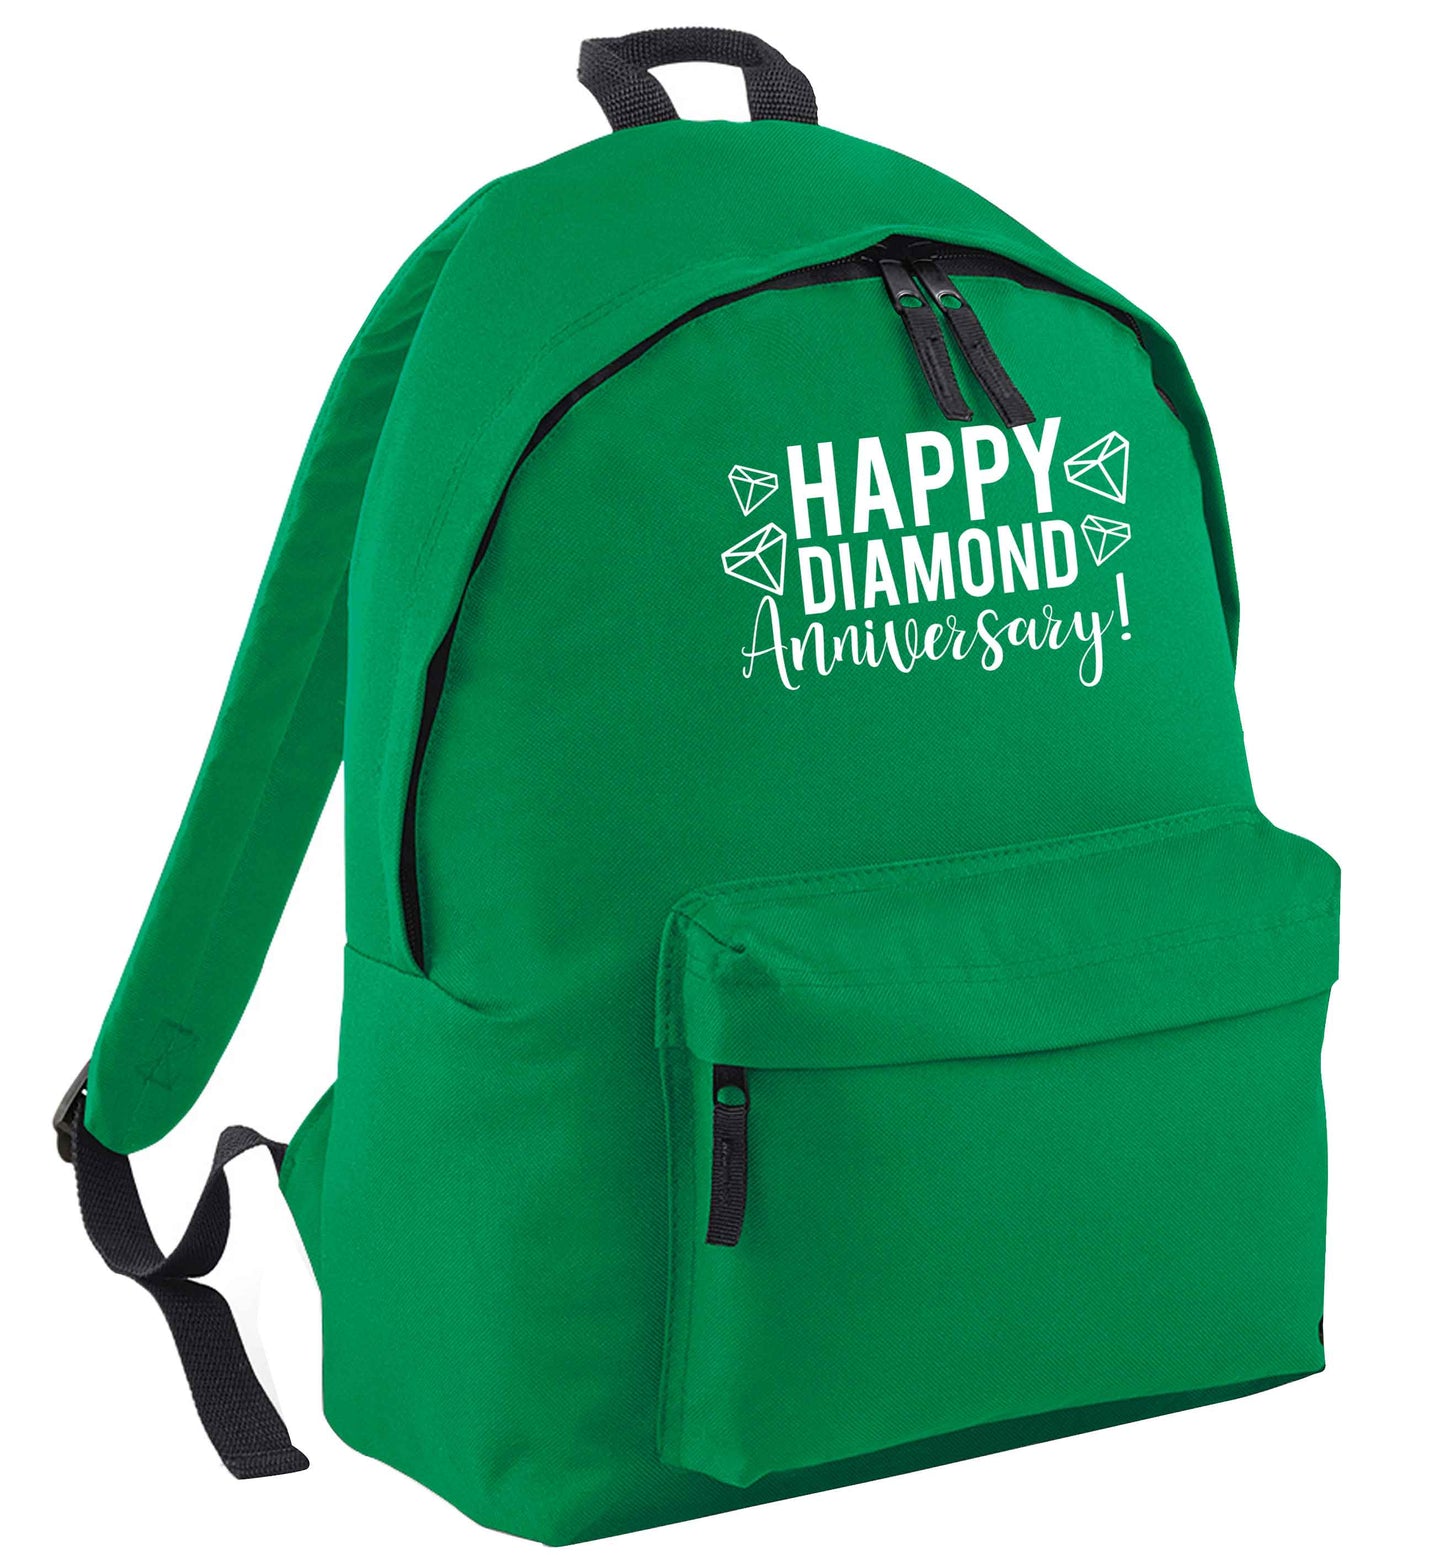 Happy diamond anniversary! green adults backpack